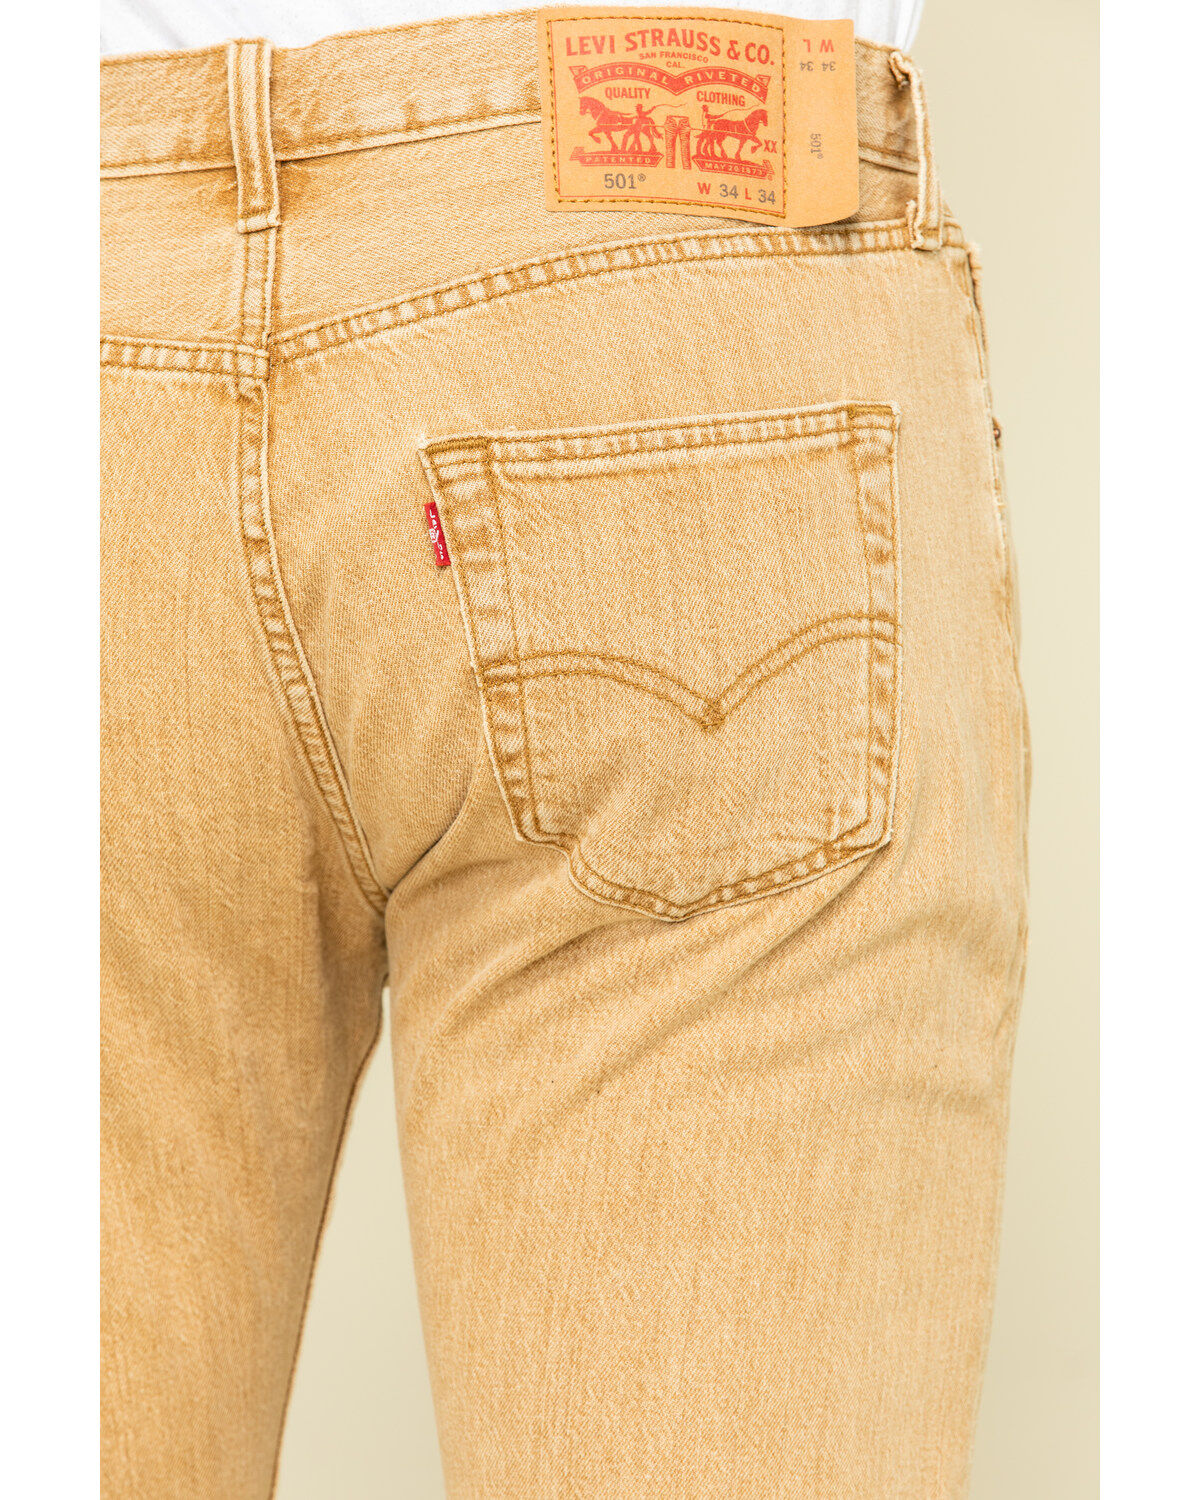 tan levi jeans 501